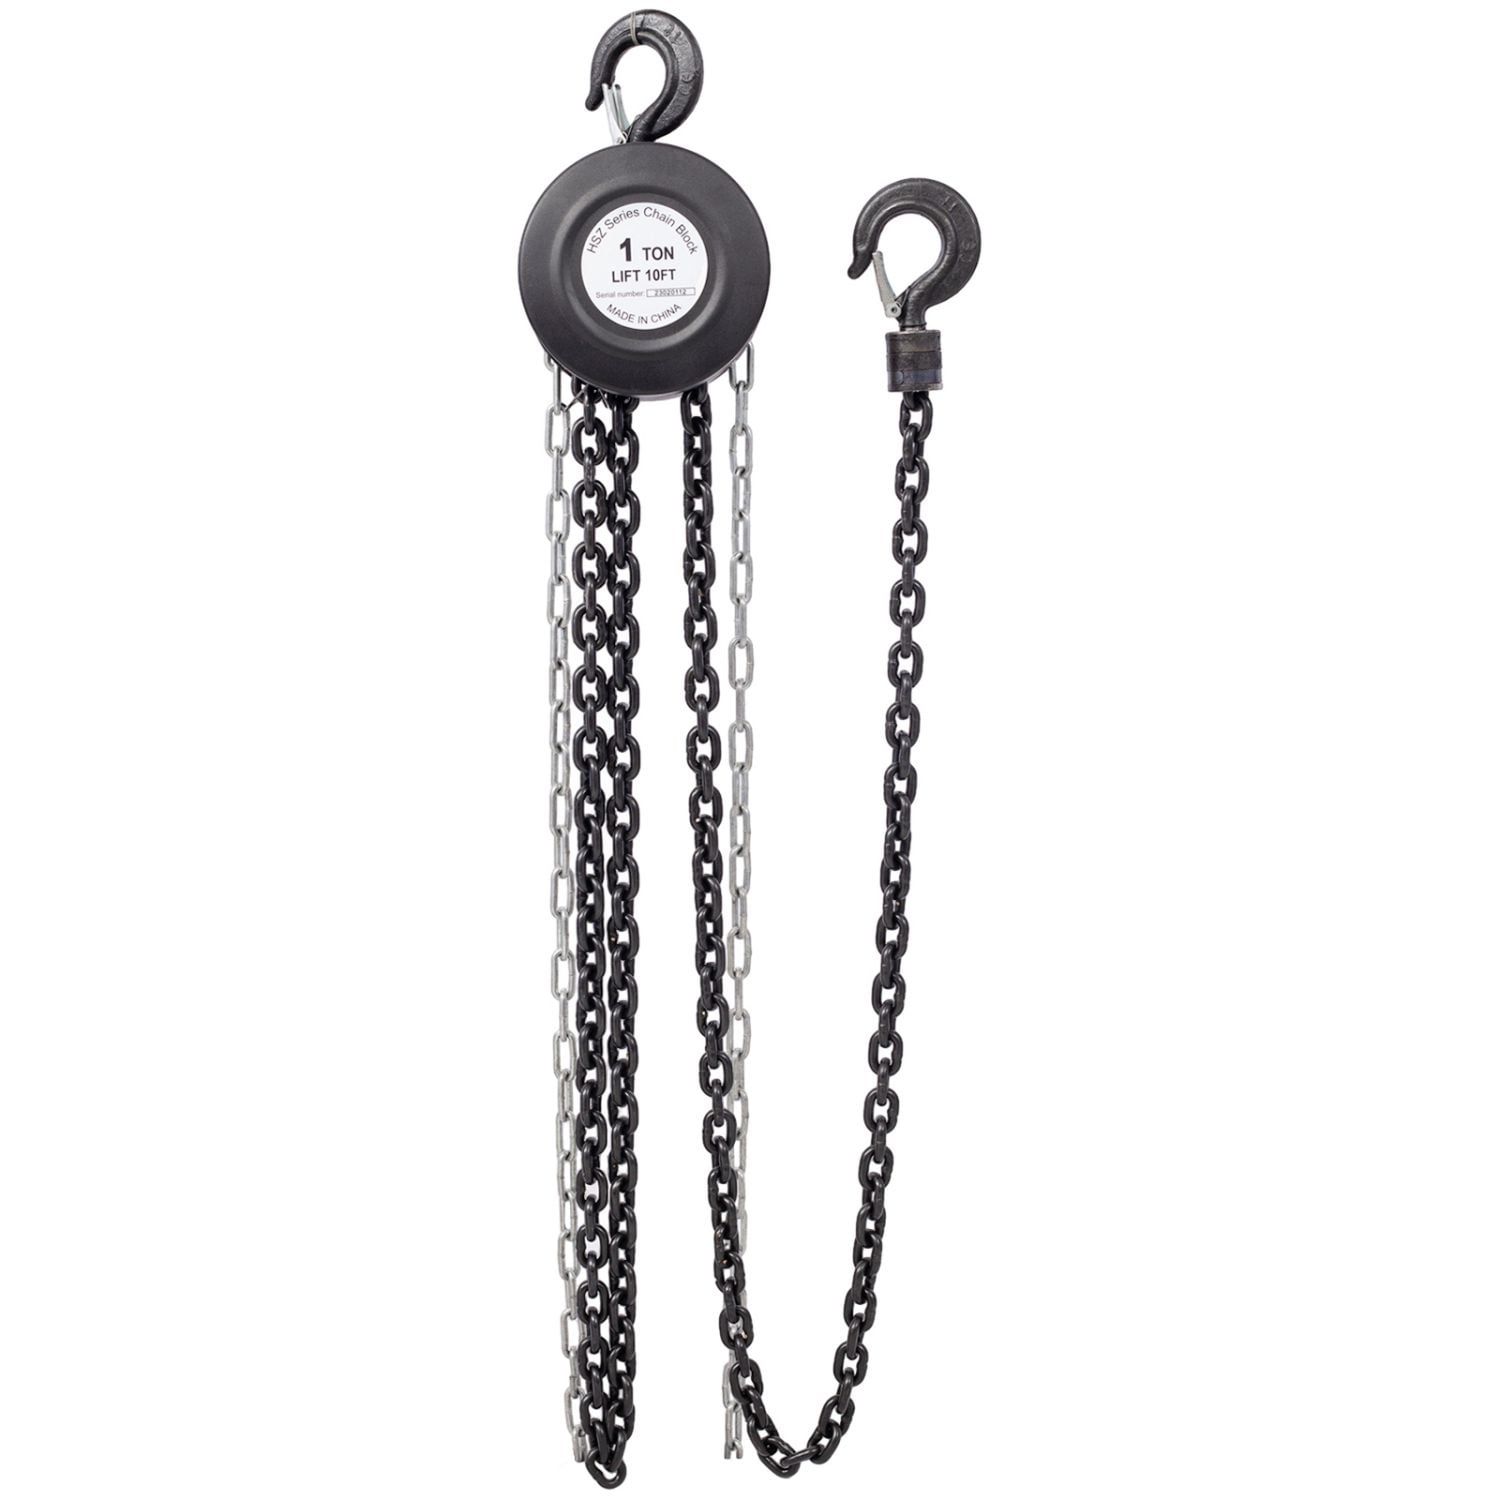 Chain hoist 2200 lbs.Black 10 ft. Steel Manual Chain Hoist Log Hook with 2 Heavy Duty Hooks